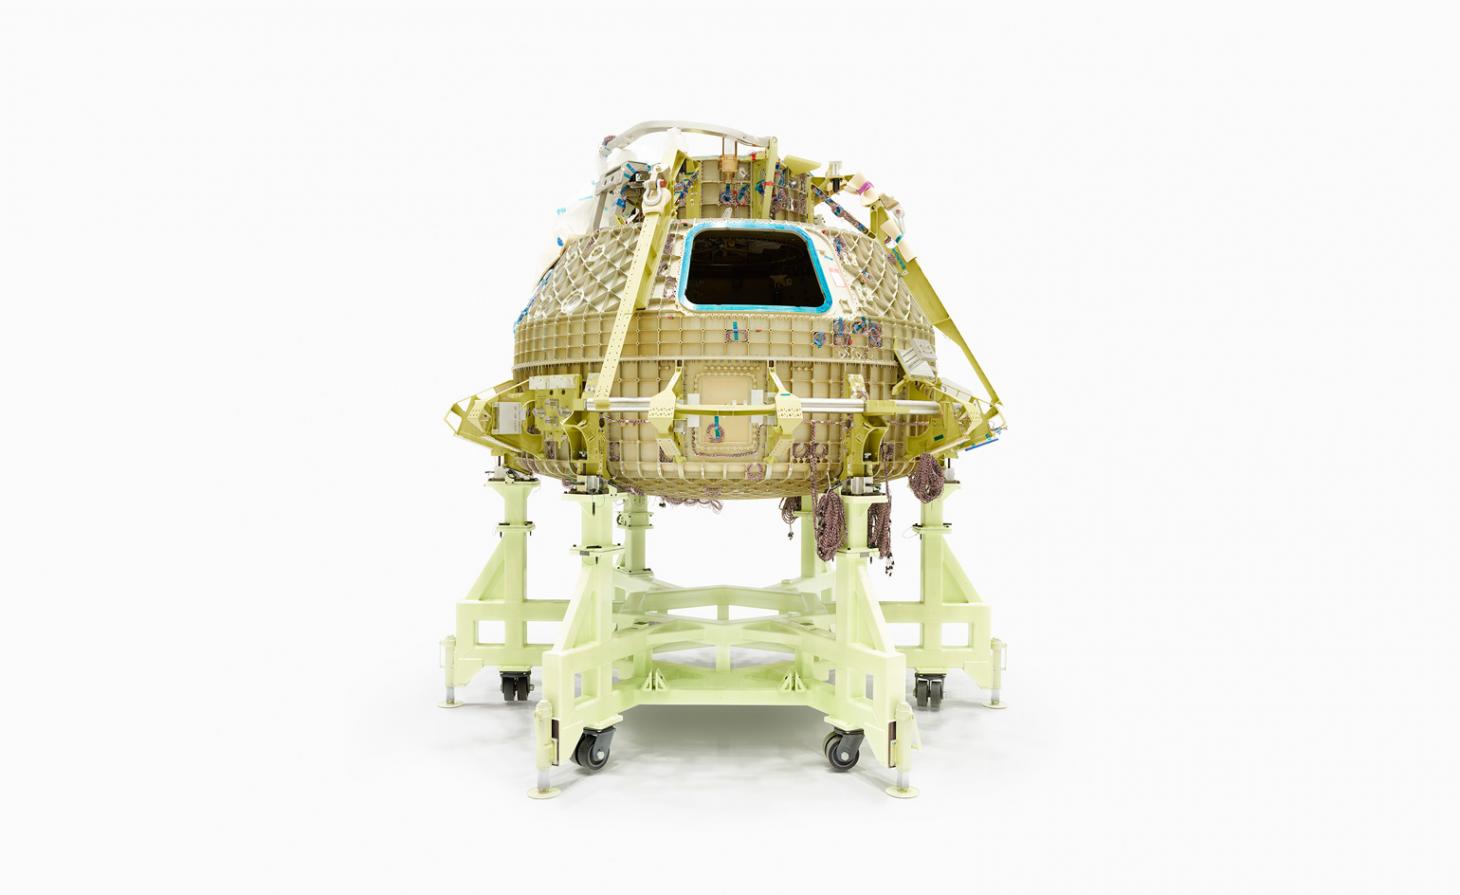 photographer benedict redgrove documents nasa orion spacecraft project-21